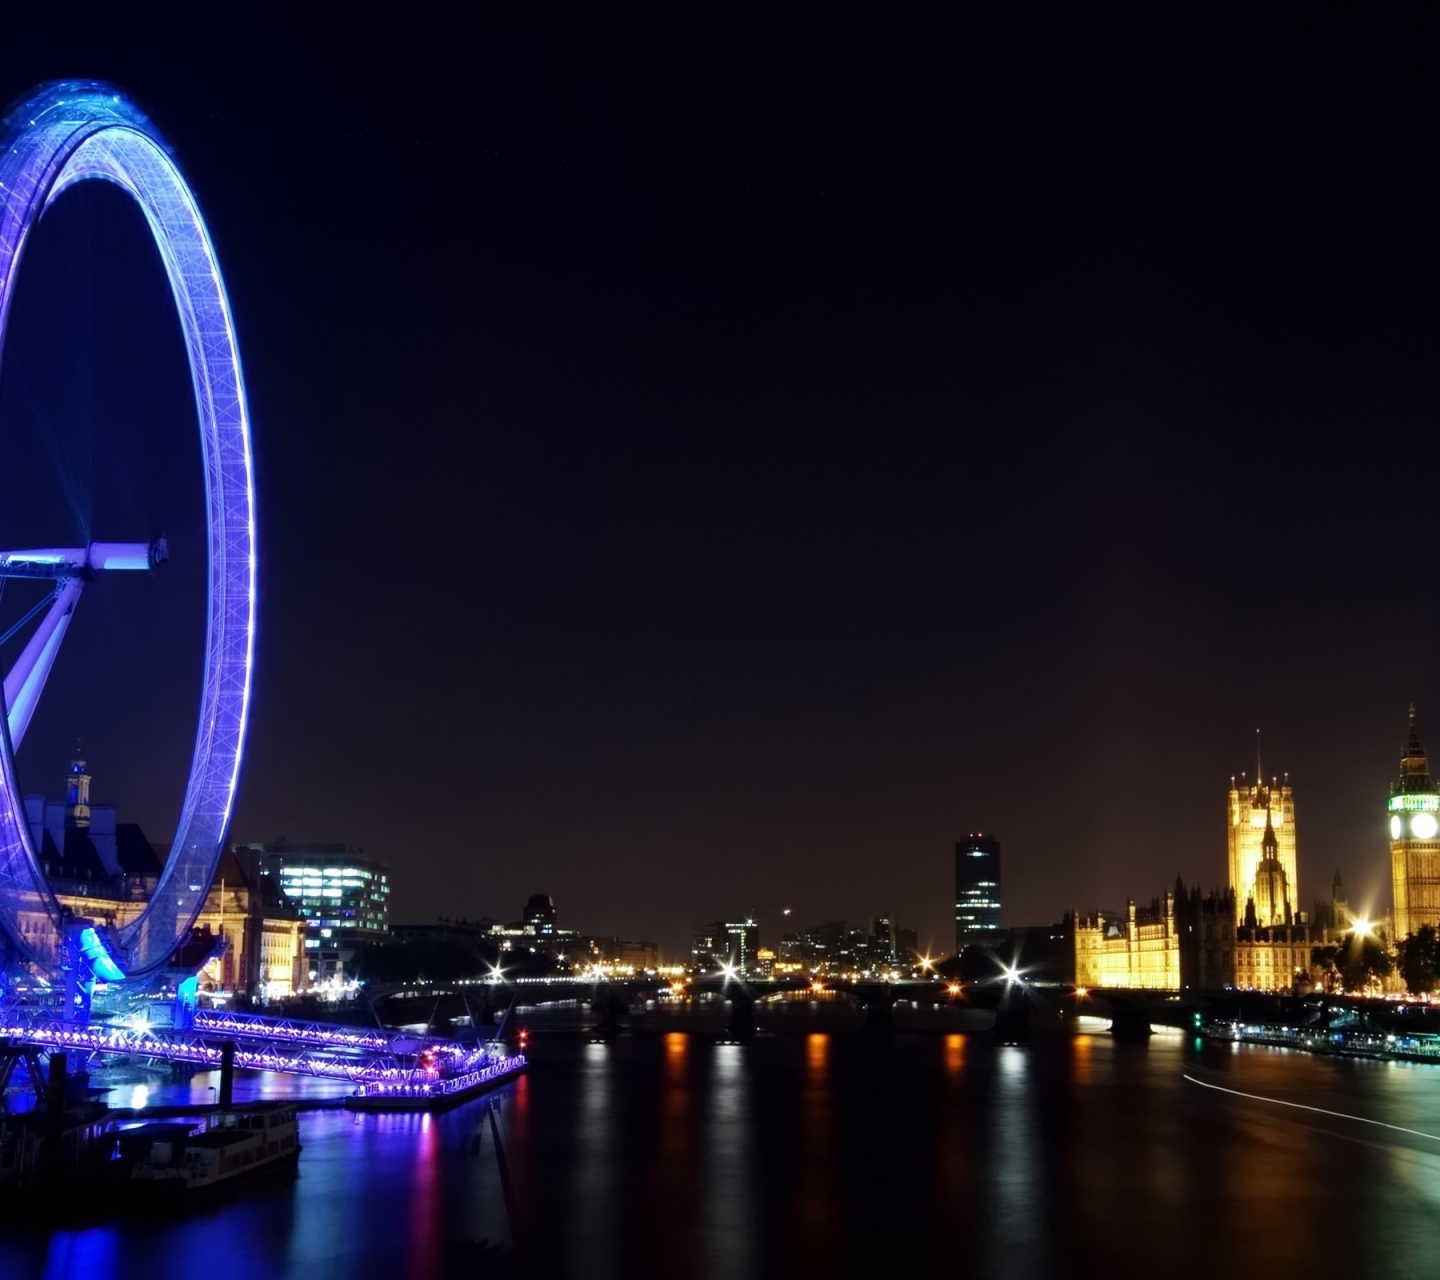 Eye Night Lights Ferris Wheel London England Great Britain Building River Thames Uk City Landscape